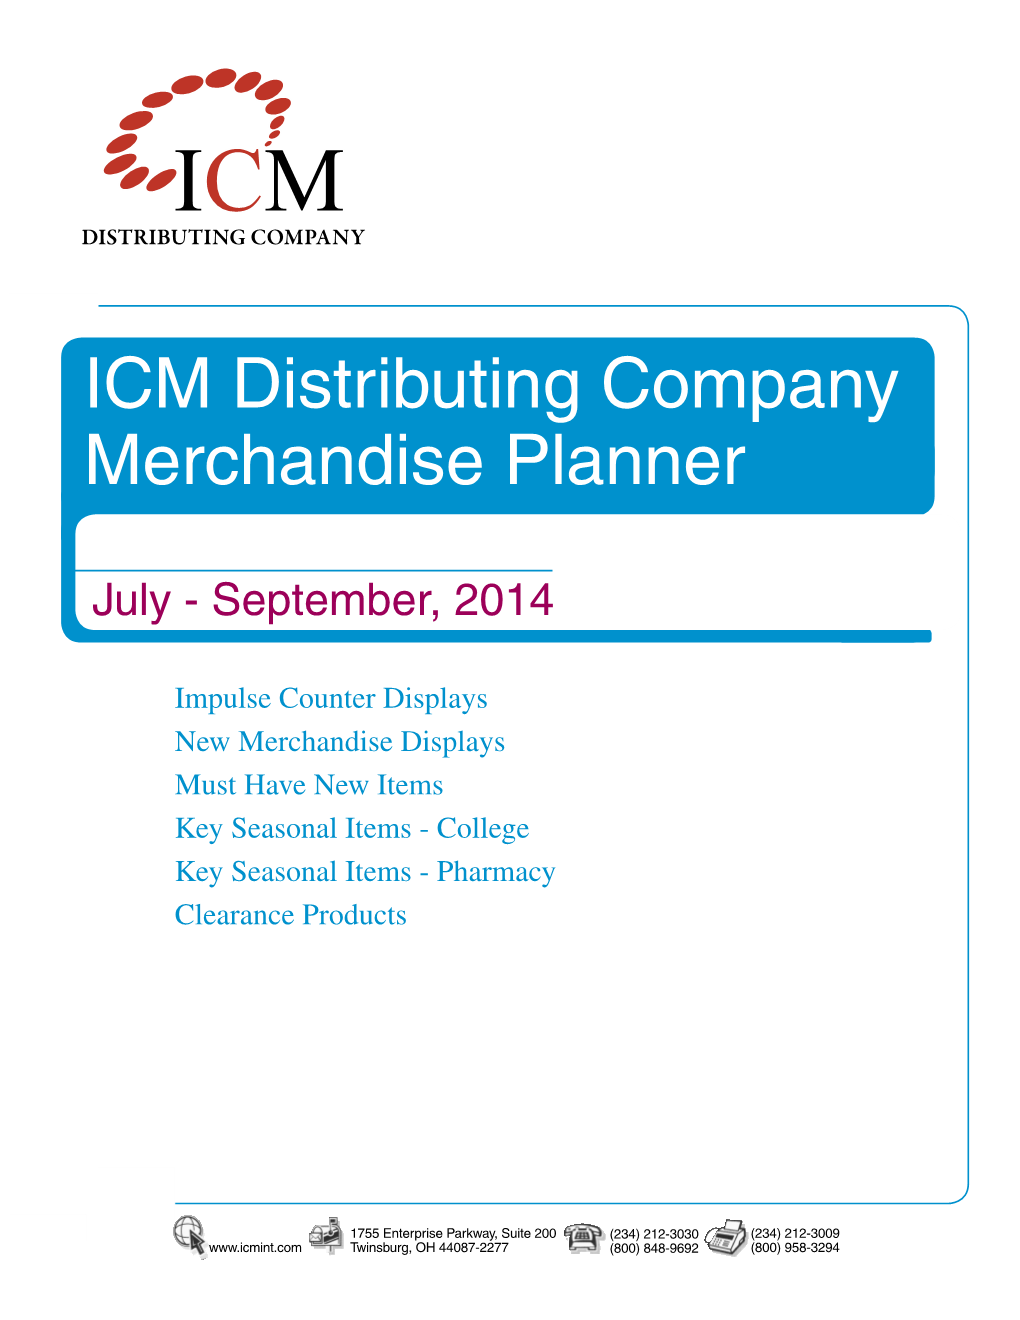 ICM Distributing Company Merchandise Planner